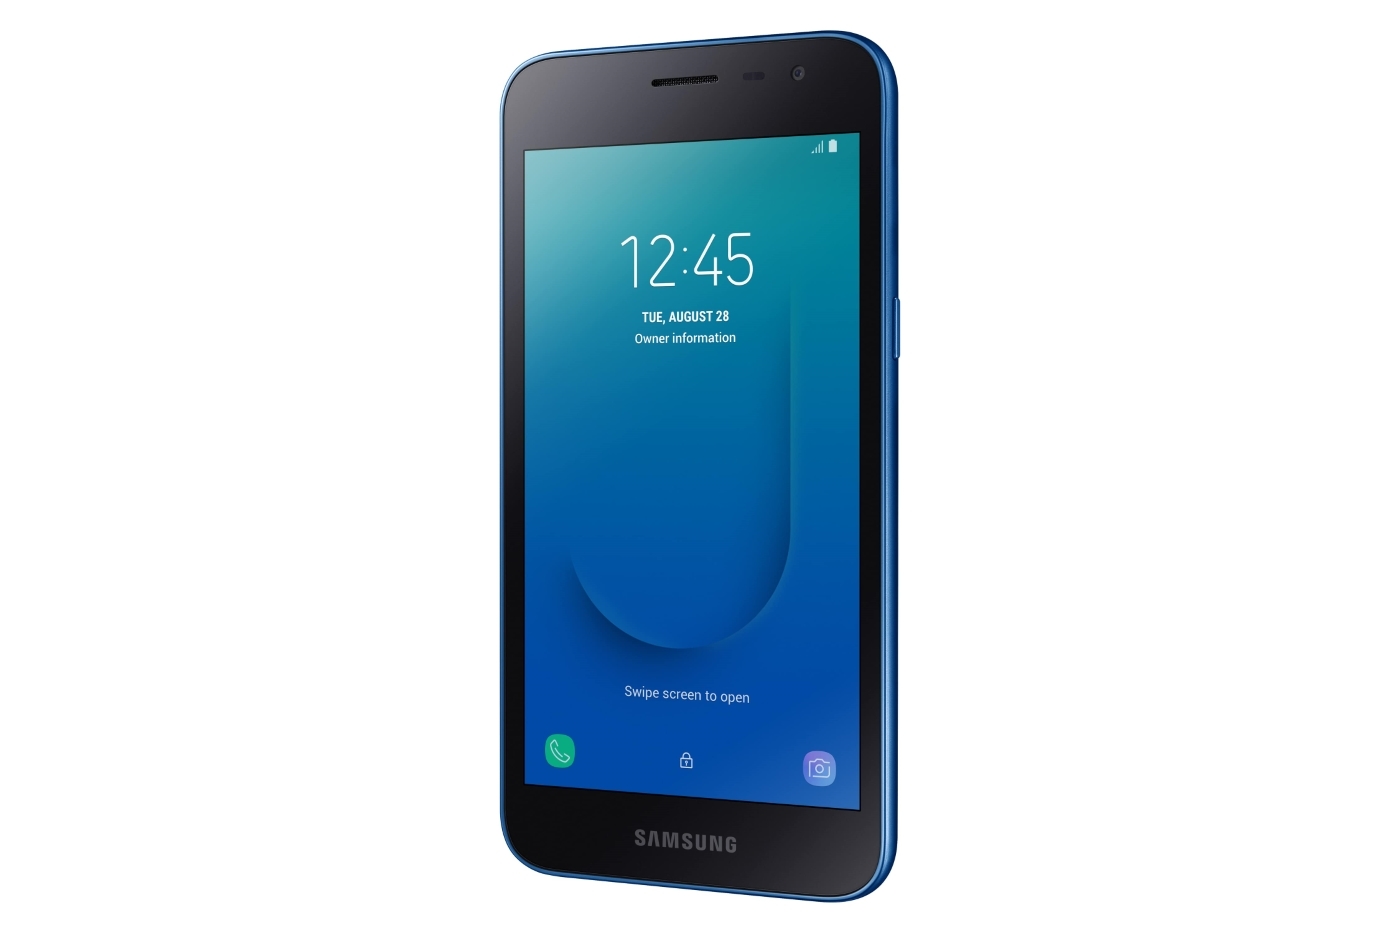 Celular SAMSUNG Galaxy J2 CORE 16 GB Azul